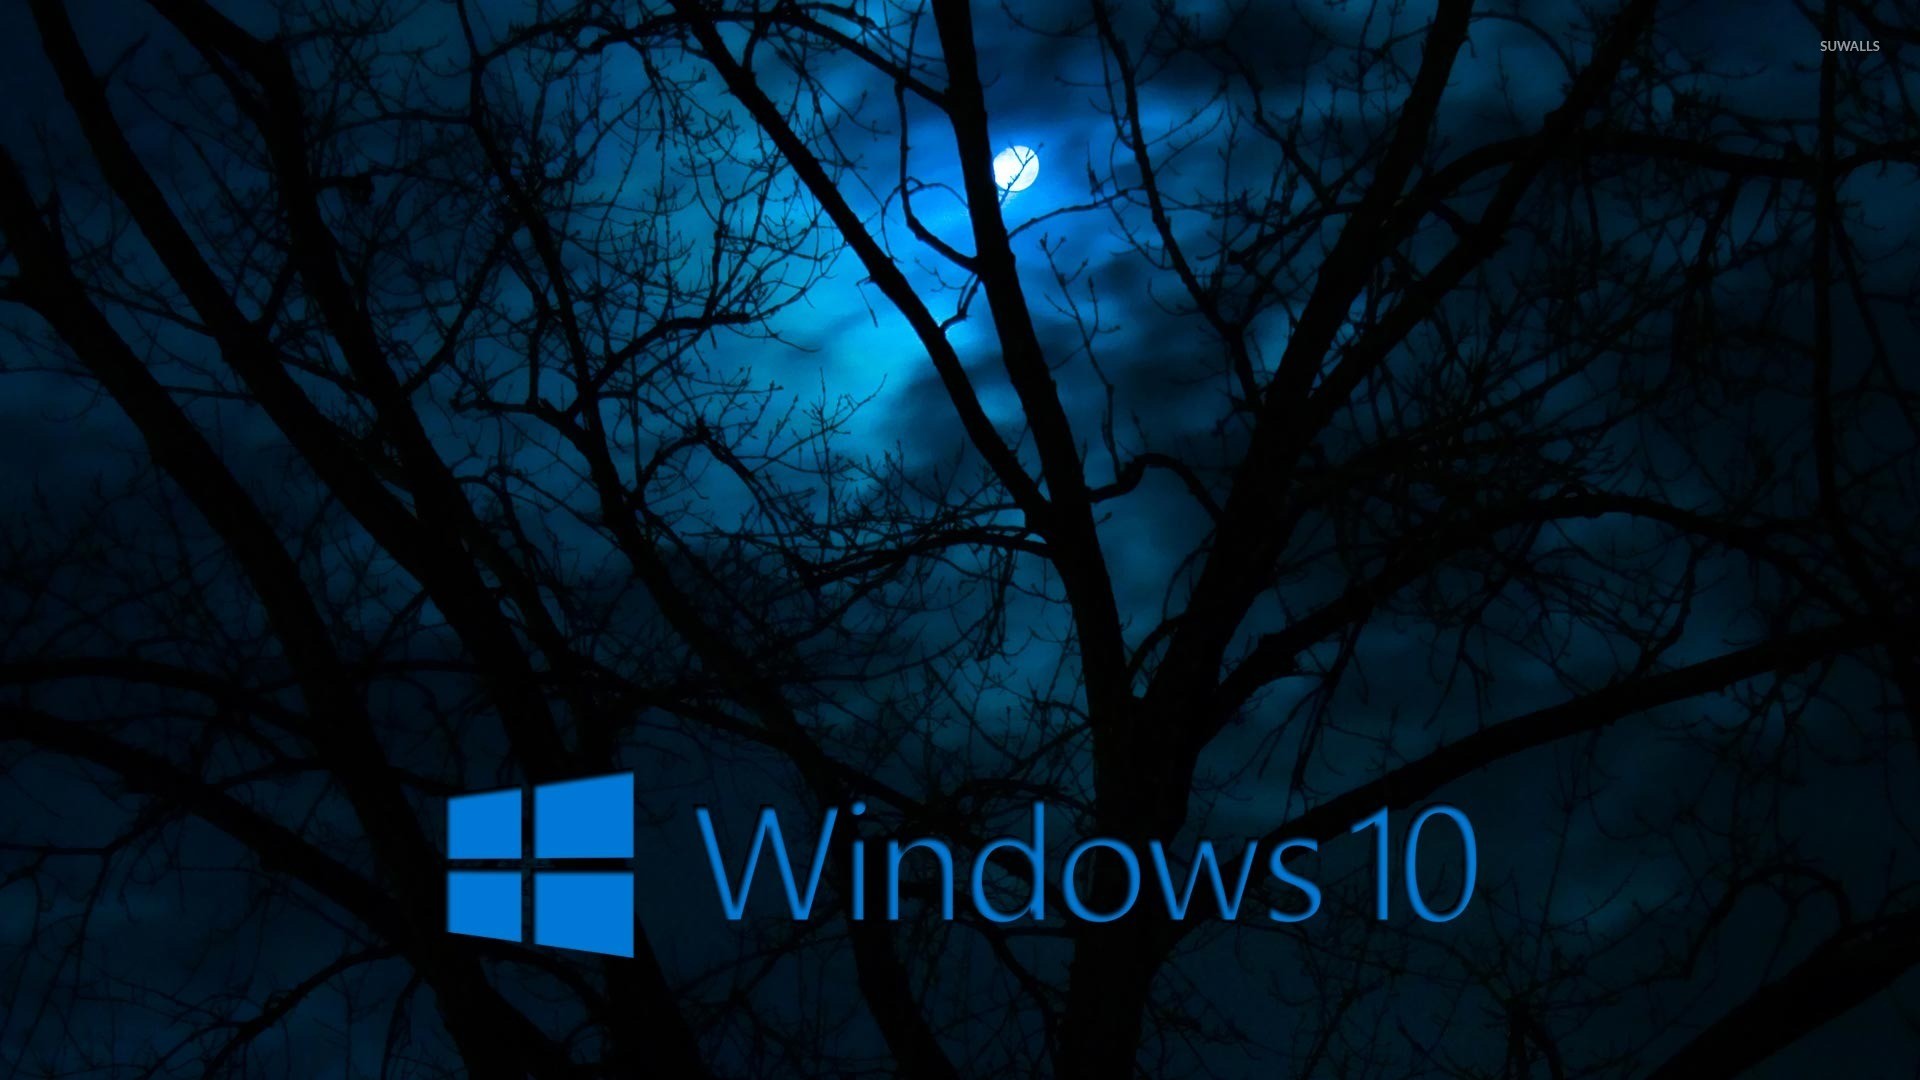 Windows 10 Dark Wallpaper 70 images 